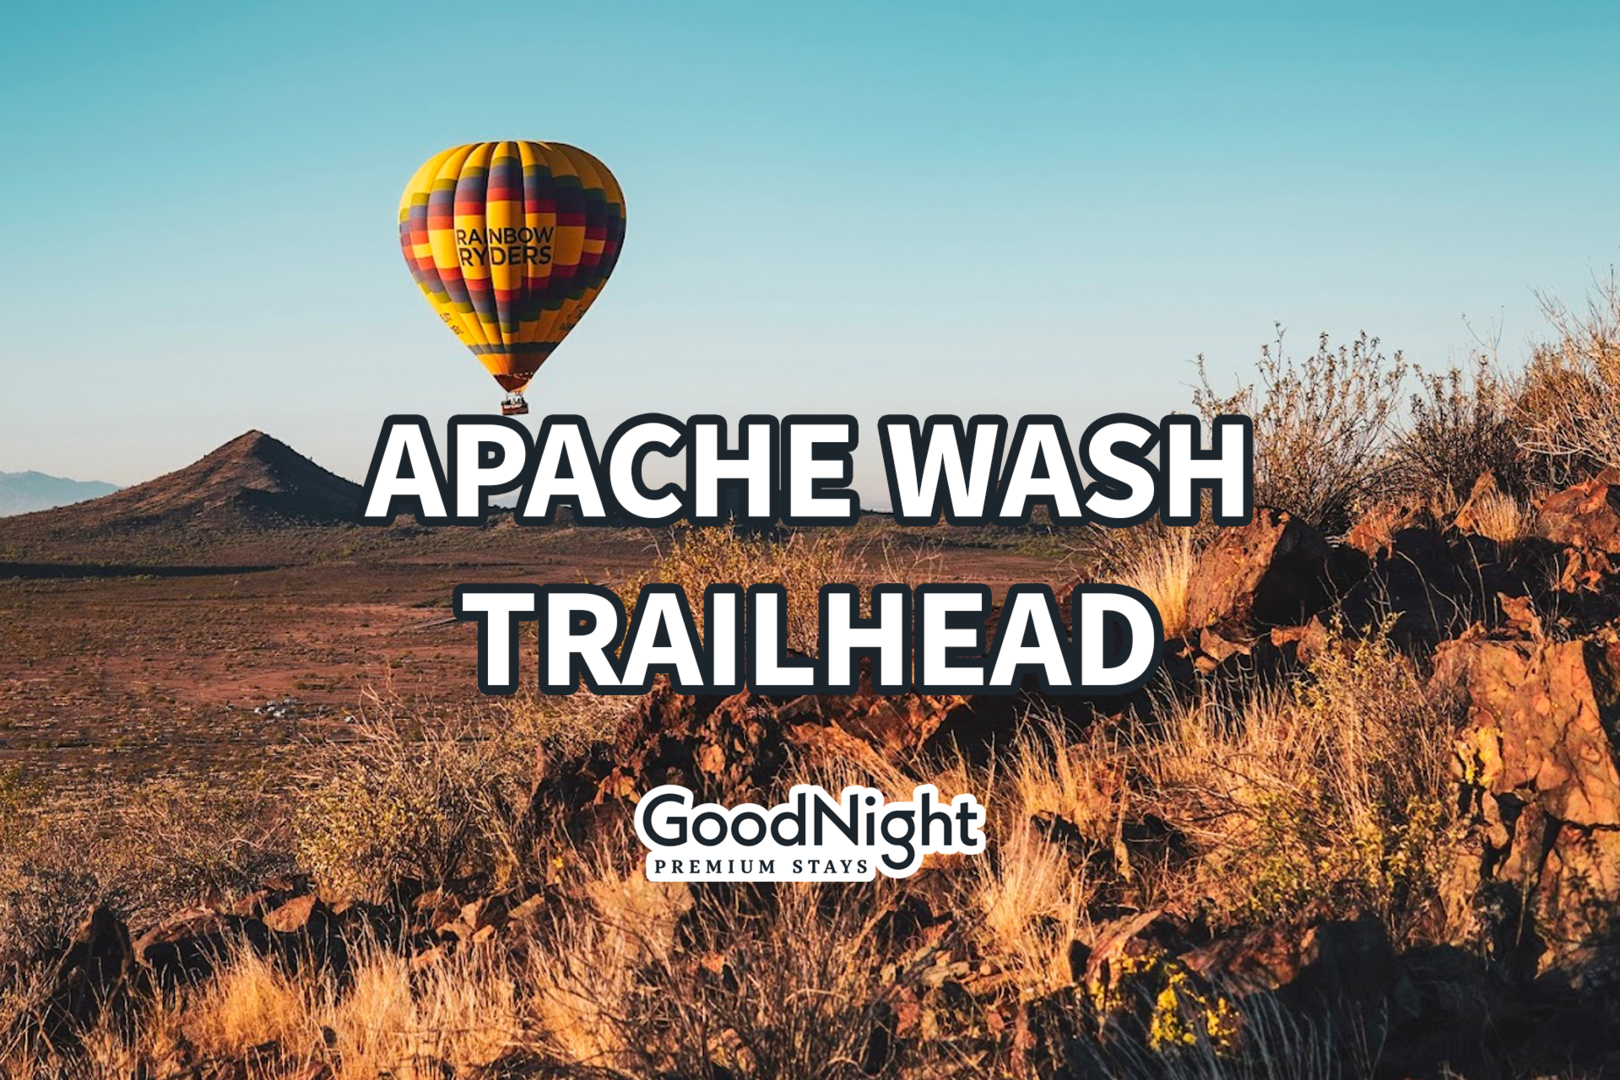 22 mins: Apache Wash Trailhead